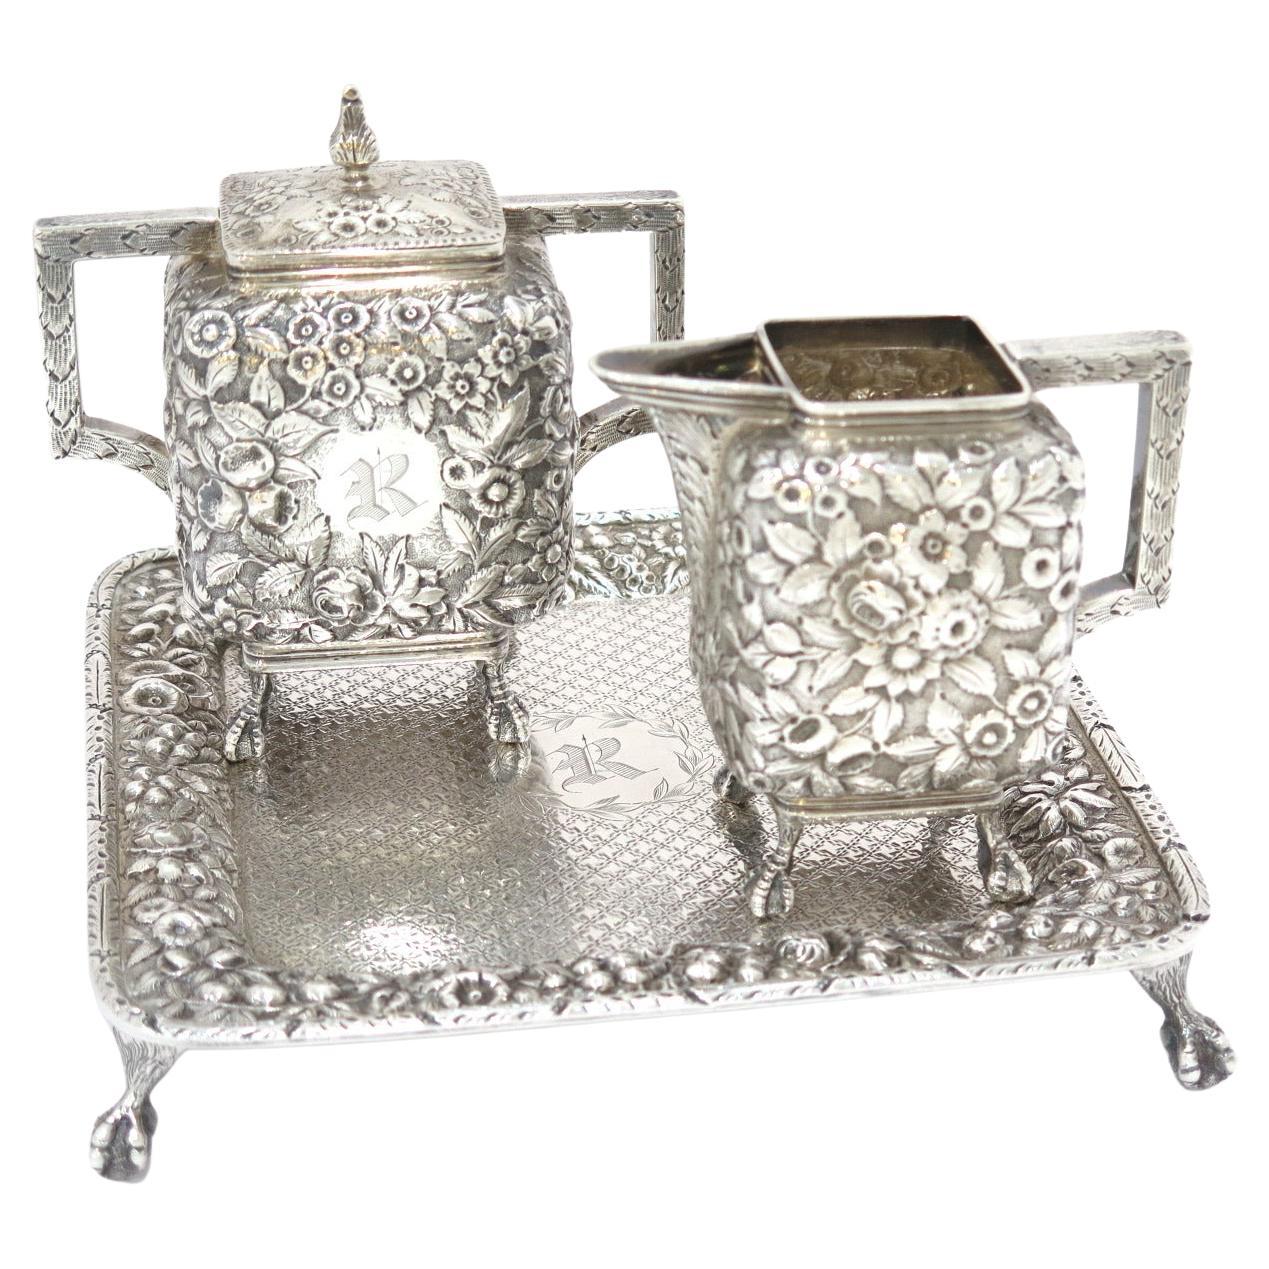 A Silver Antique American Floral Repousse Mini Sugar Bowl, Creamer & Tray Set